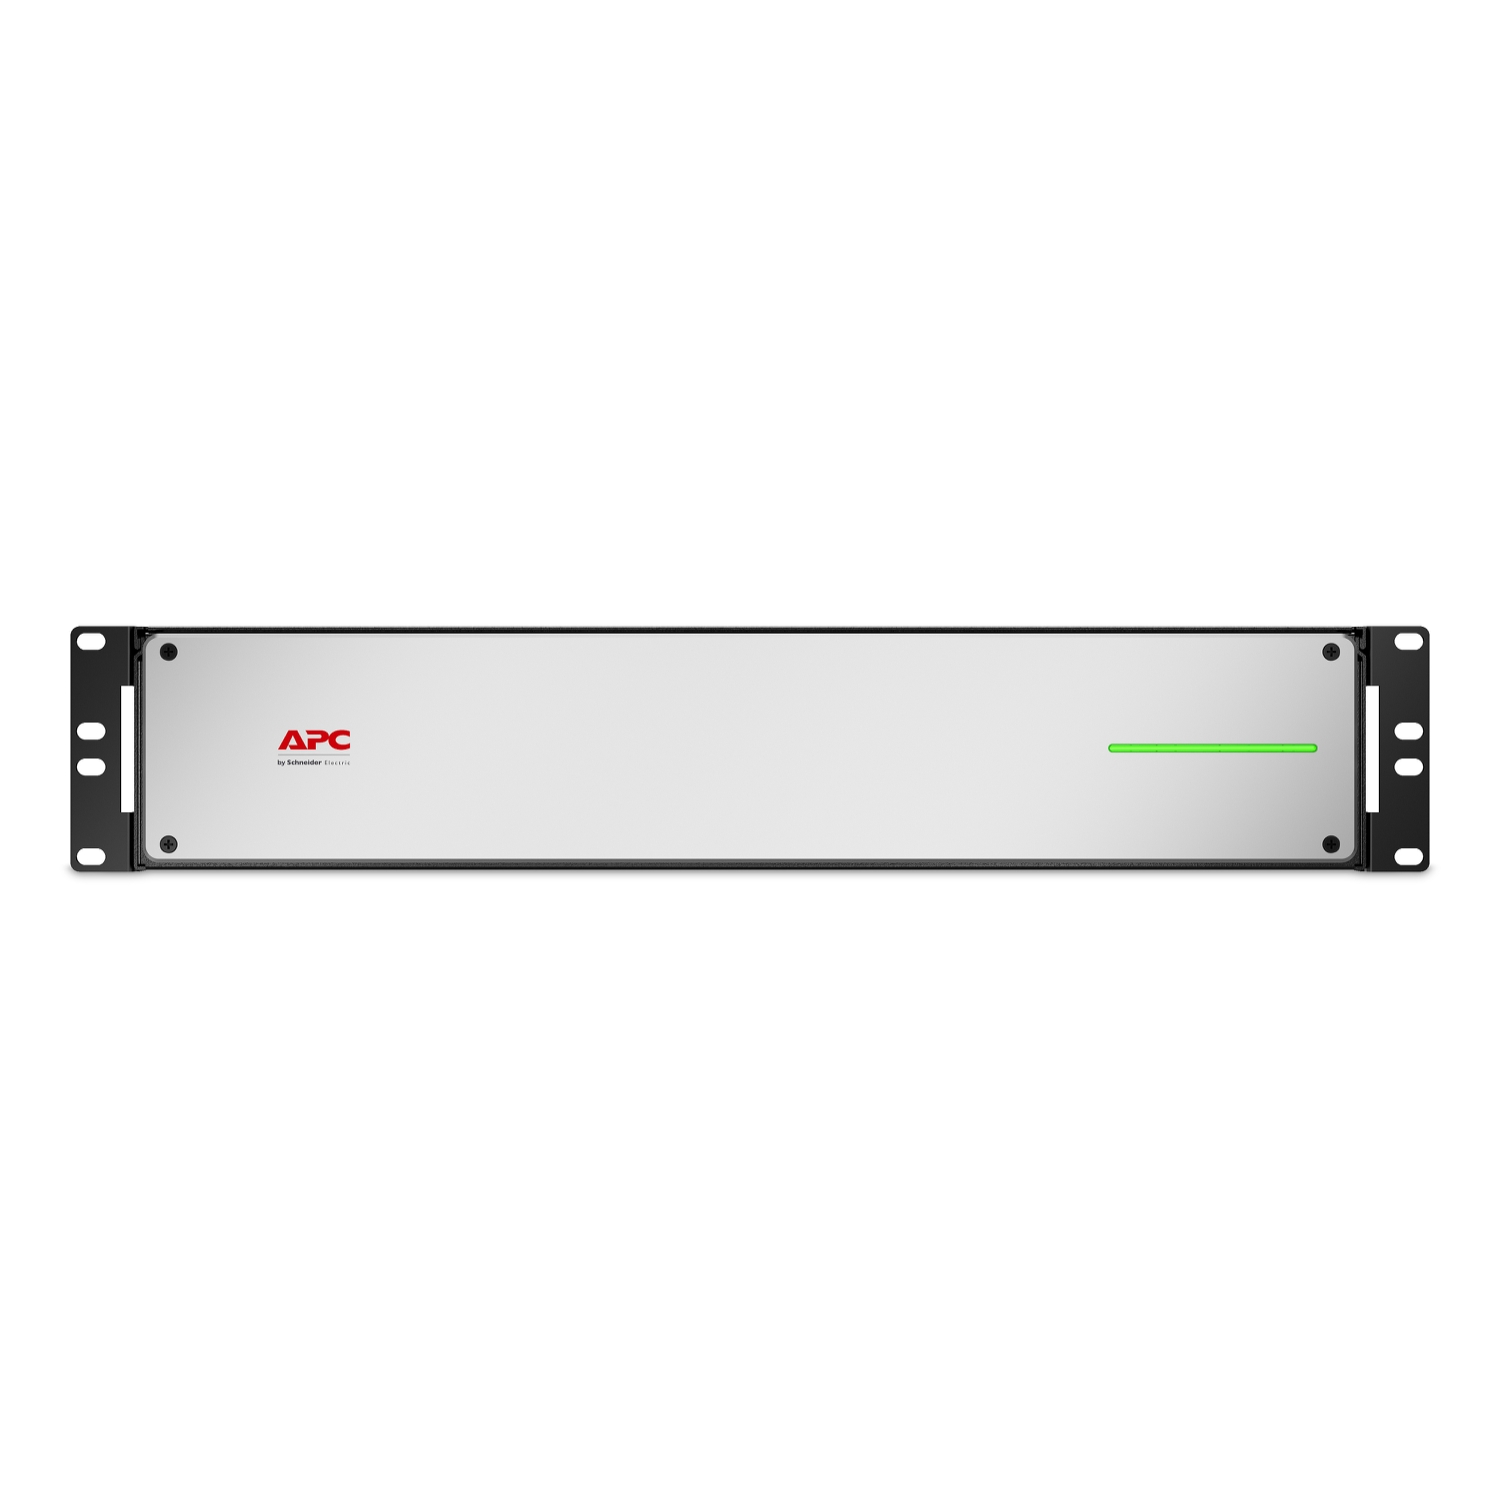 APC Smart-UPS On-Line, 1000VA, Rackmount 3U, 230V, 8x C13 IEC outlets,  SmartSlot, Extended runtime, W/ rail kit, W/ Lithium-ion external battery -  APC Croatia